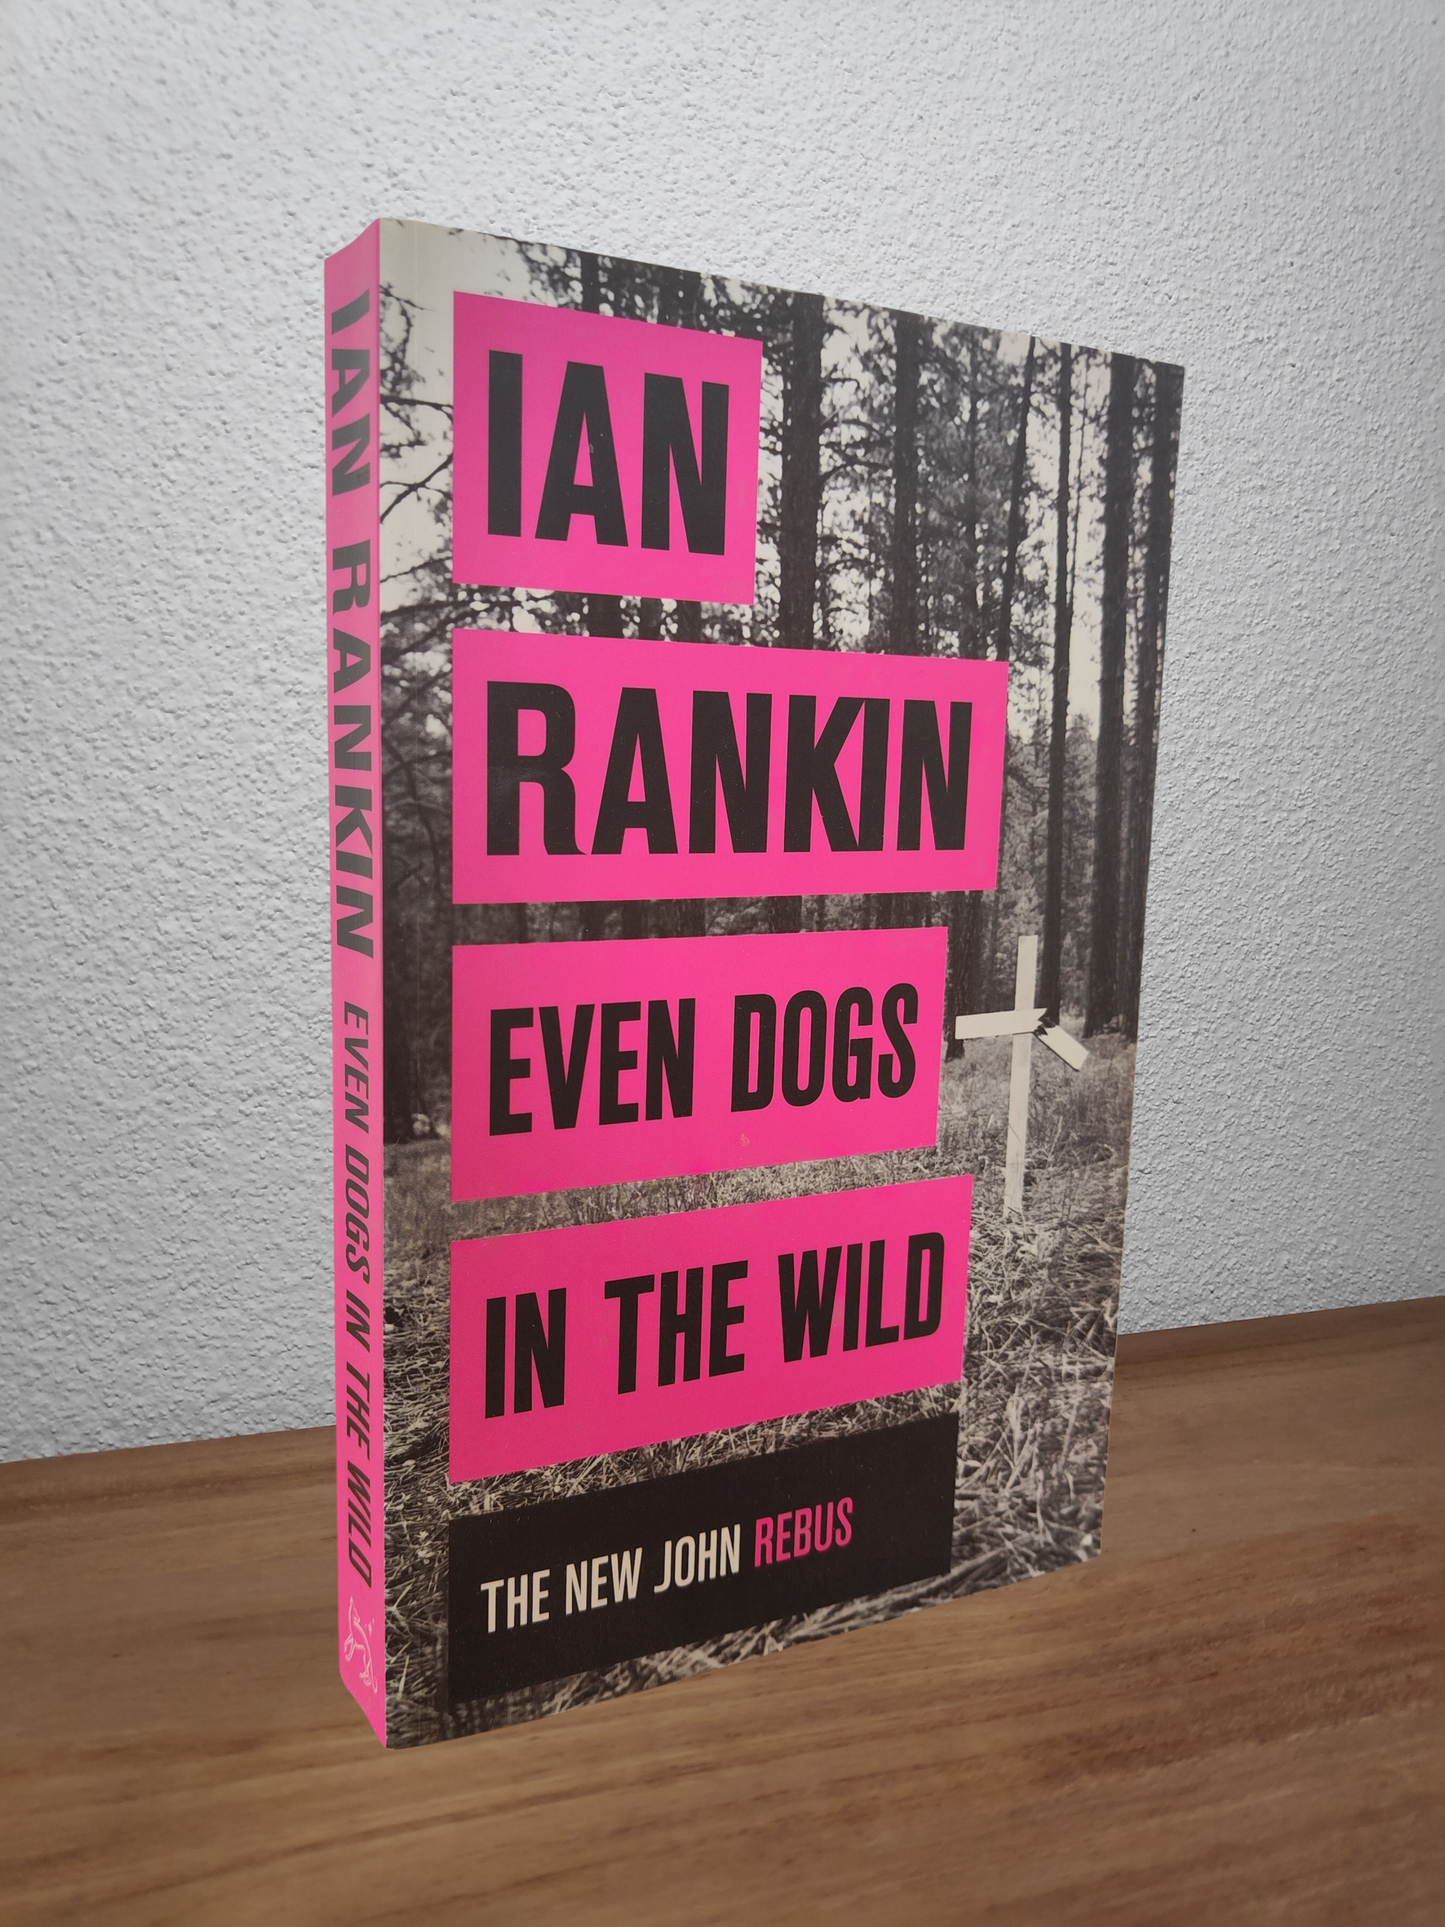 Ian Rankin - Even Dogs in the Wild (Inspector Rebus #20)